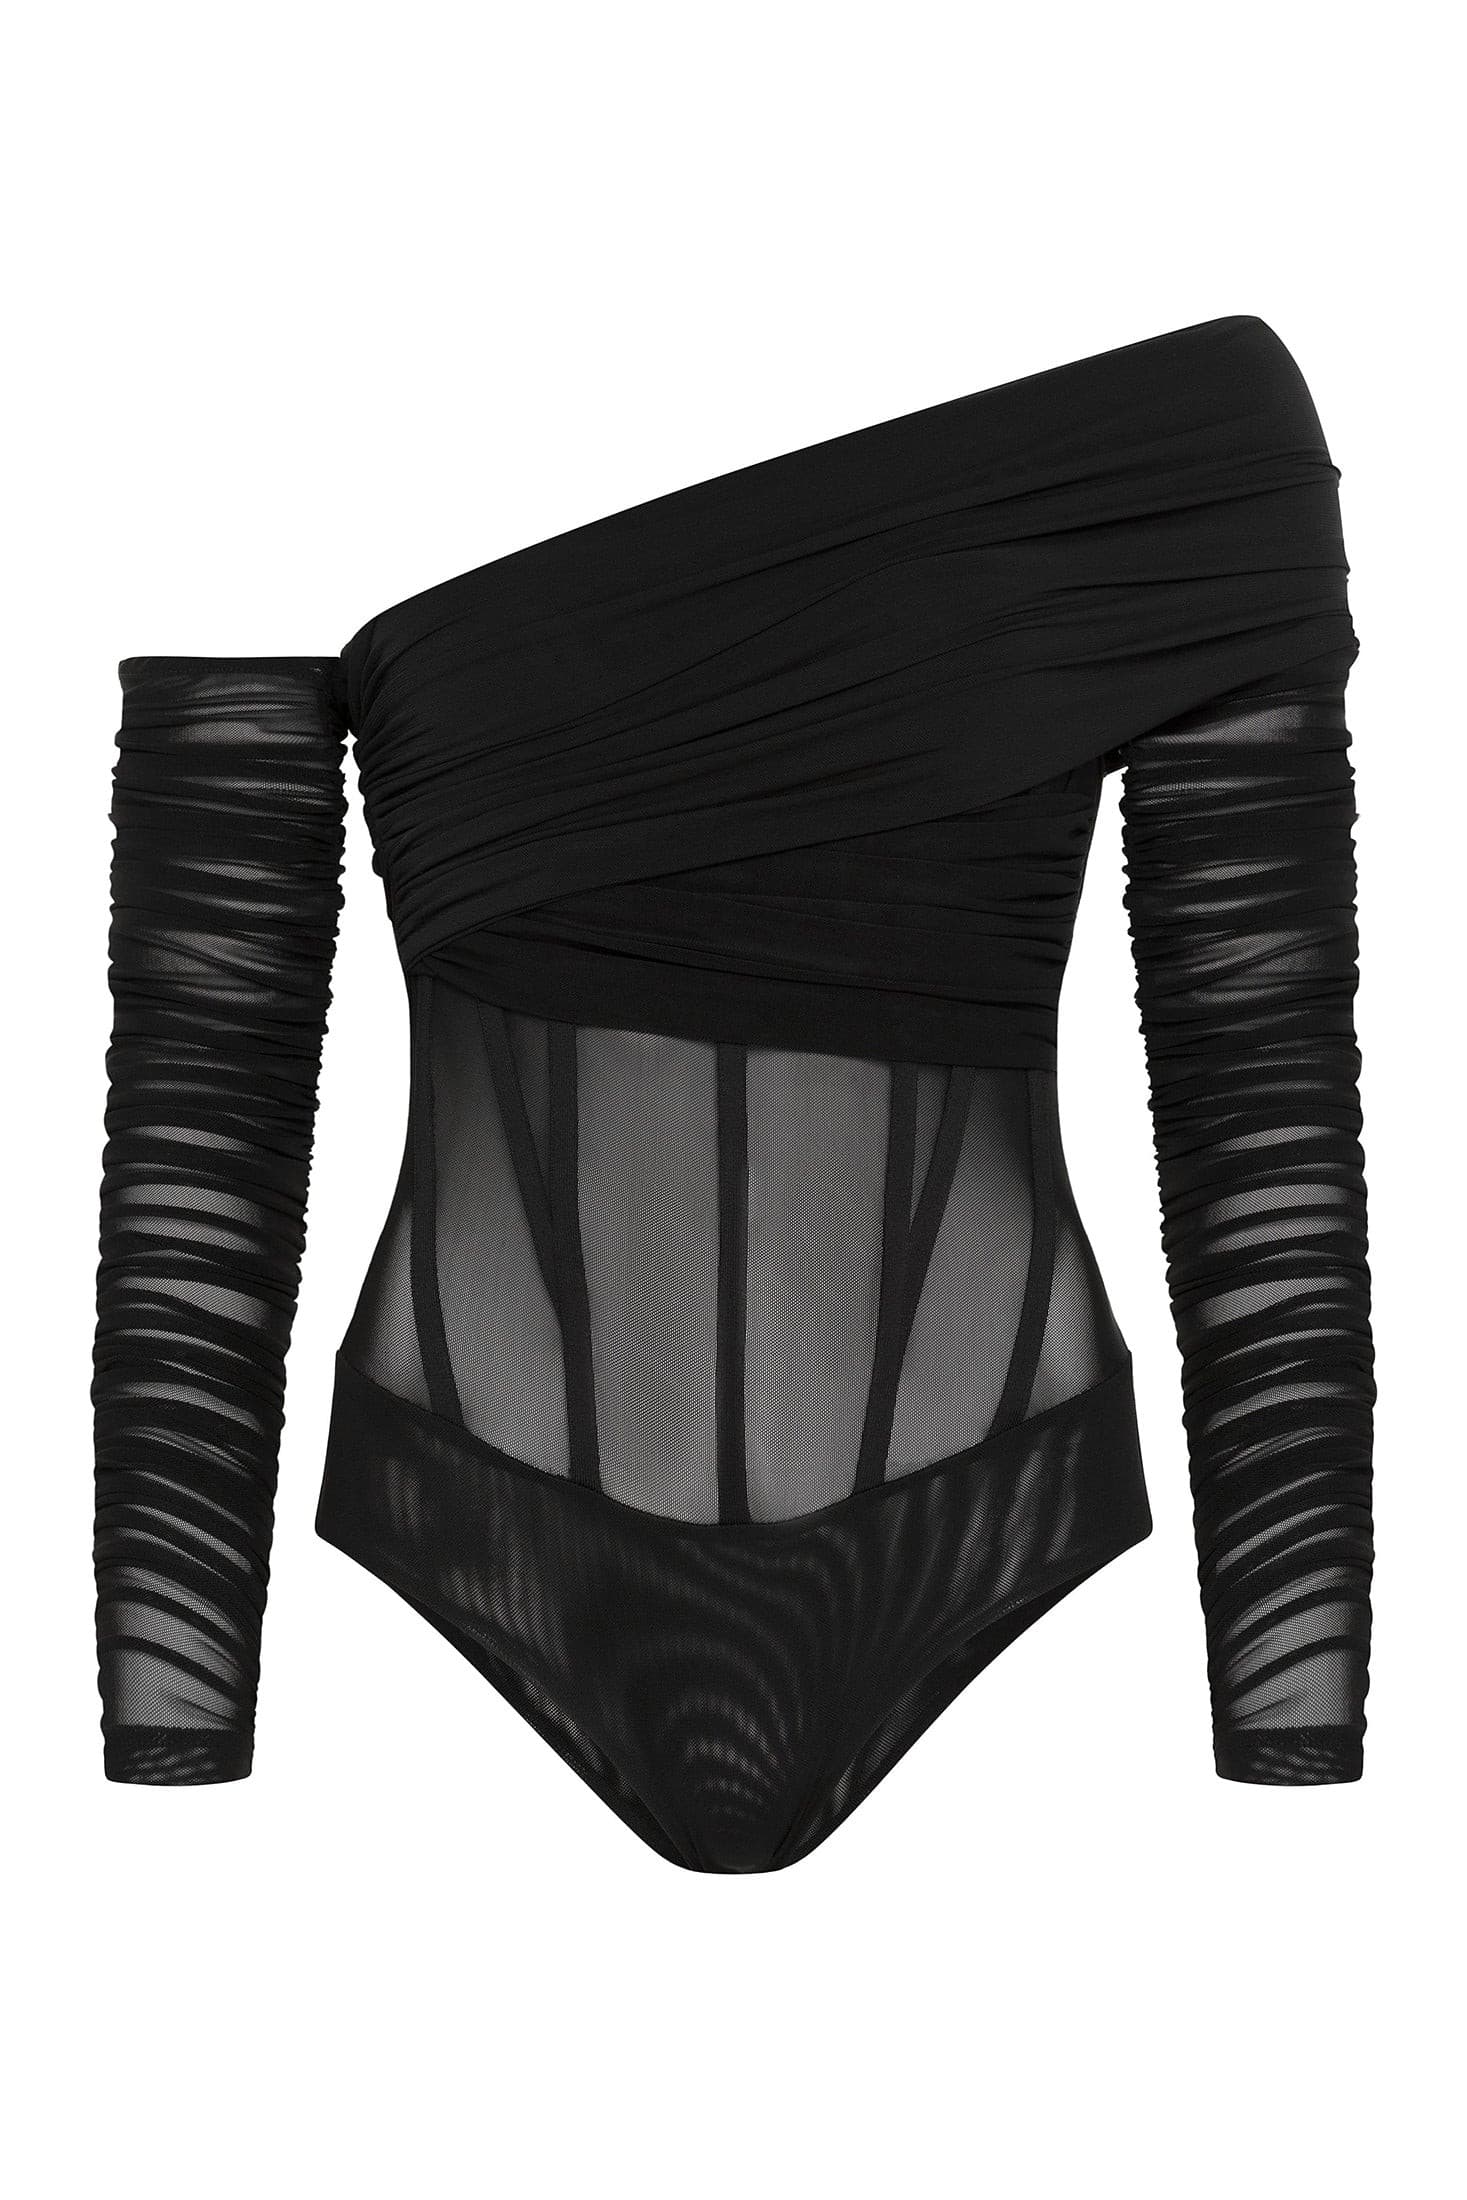 Saint Genies vinyl mesh underwire corset bodysuit in black